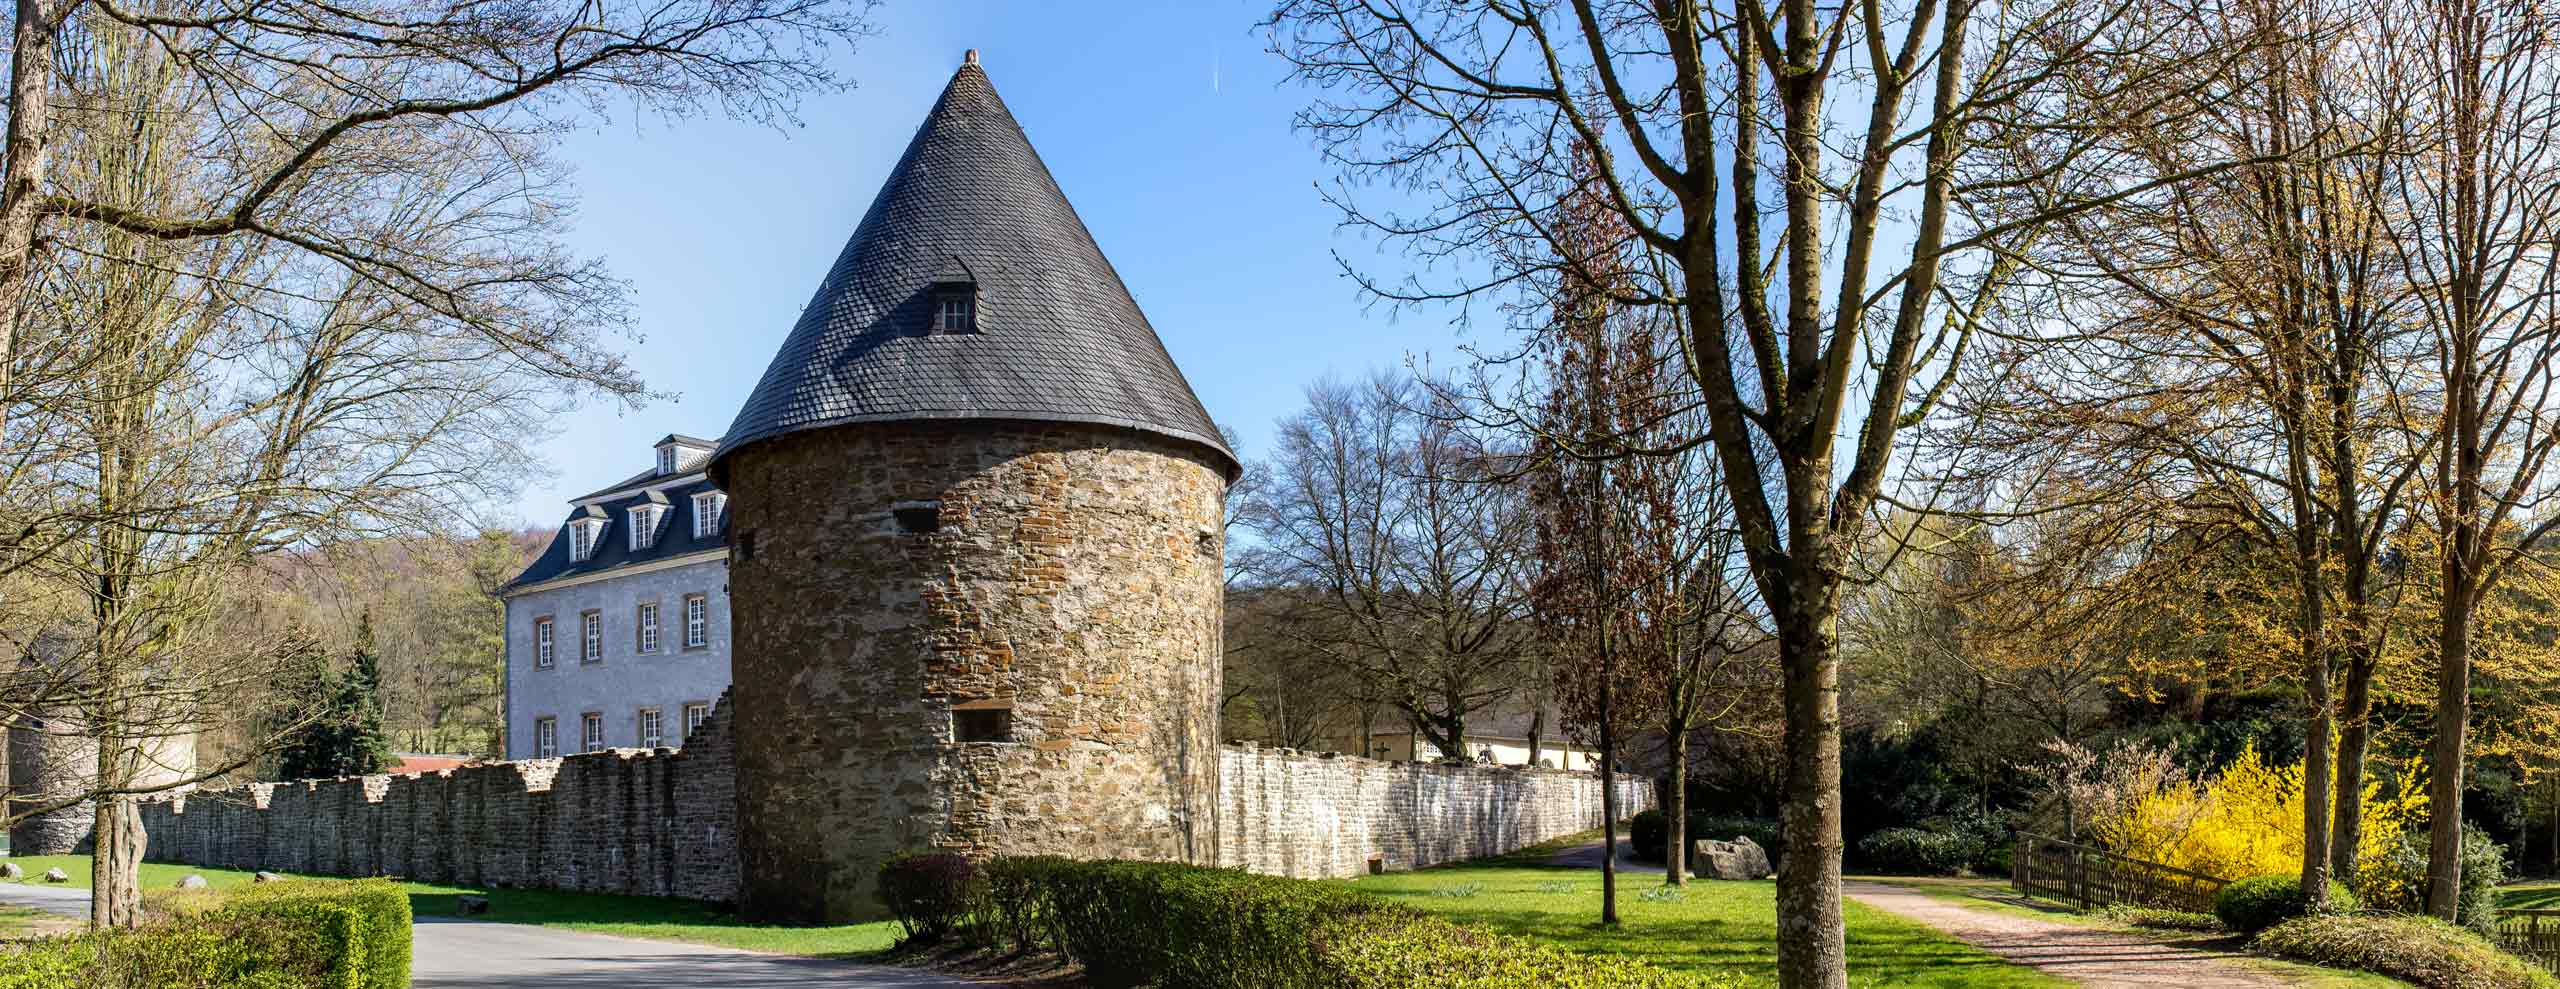 Schloss Hardenberg in Velbert an einem sonnigen Tag